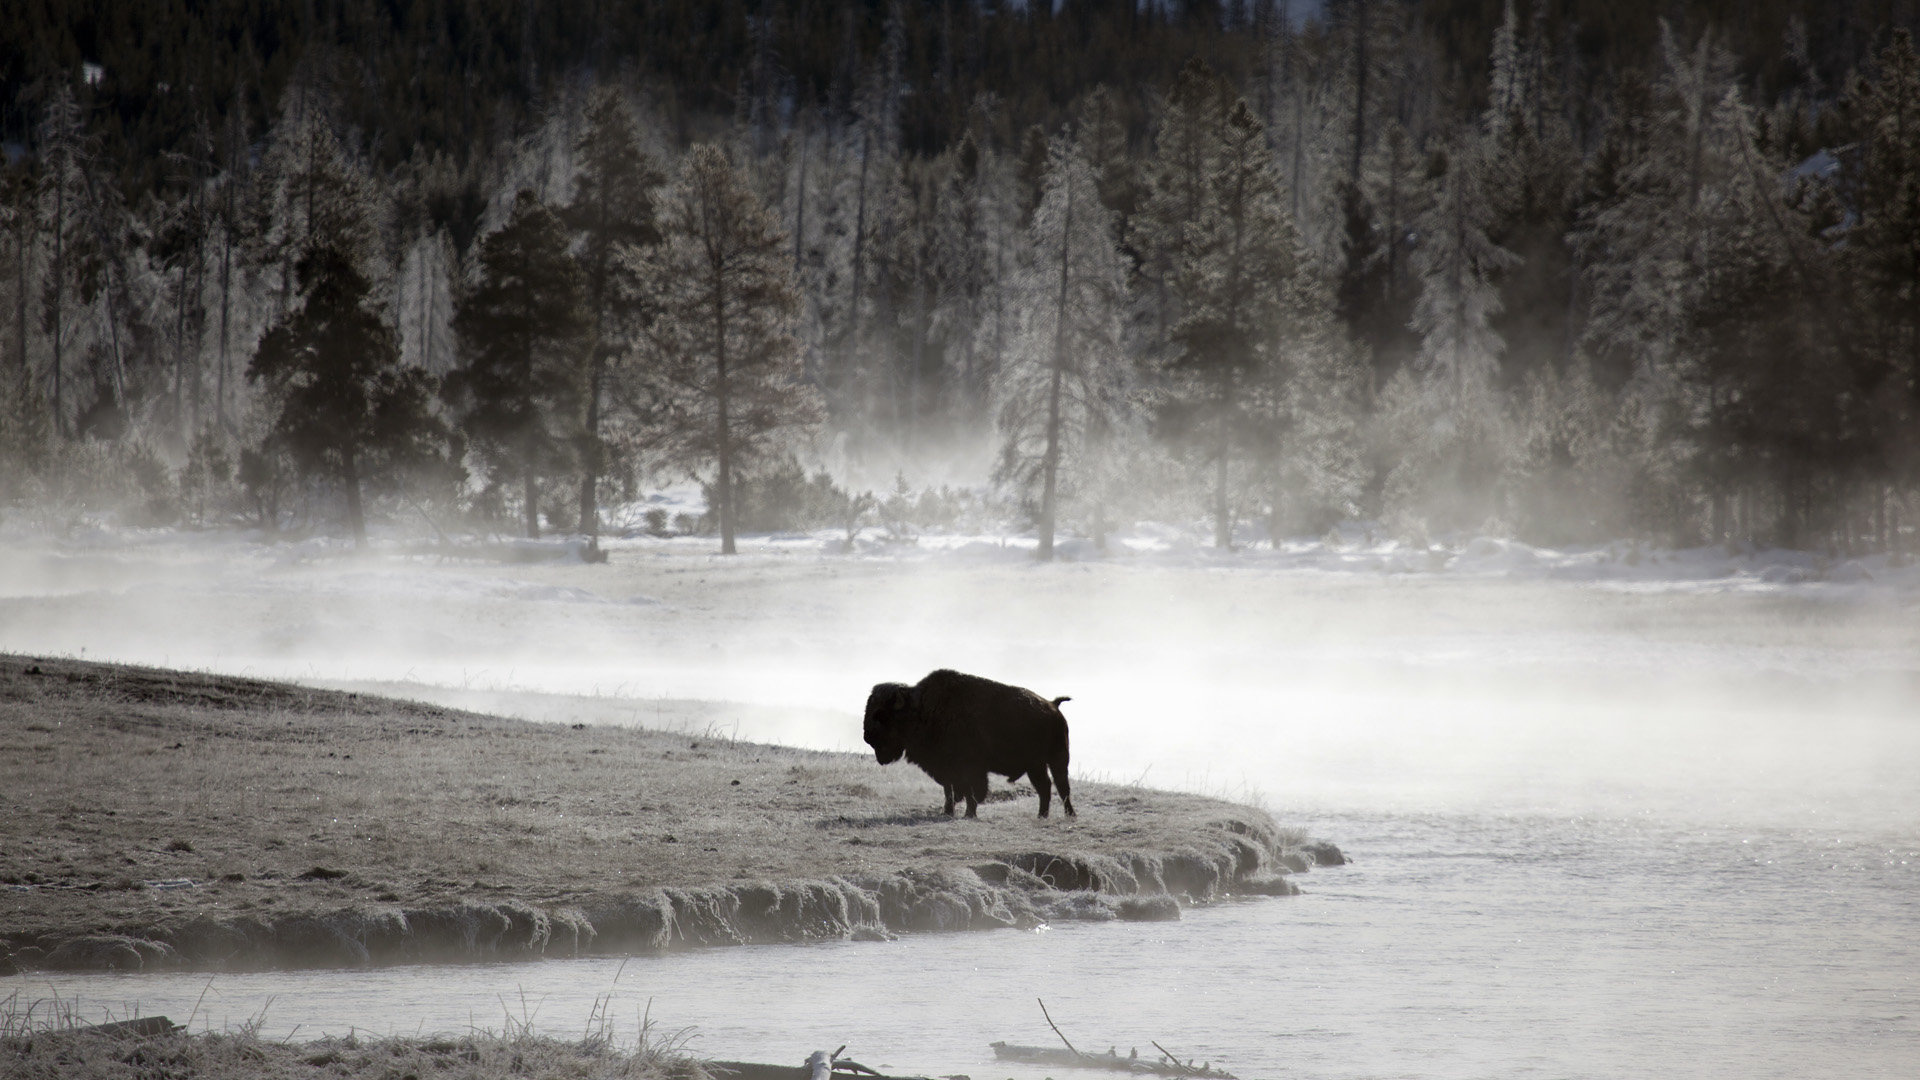 Buffalo portraits, High-definition bison wallpapers, Stunning buffalo backgrounds, 4K buffalo images, 1920x1080 Full HD Desktop